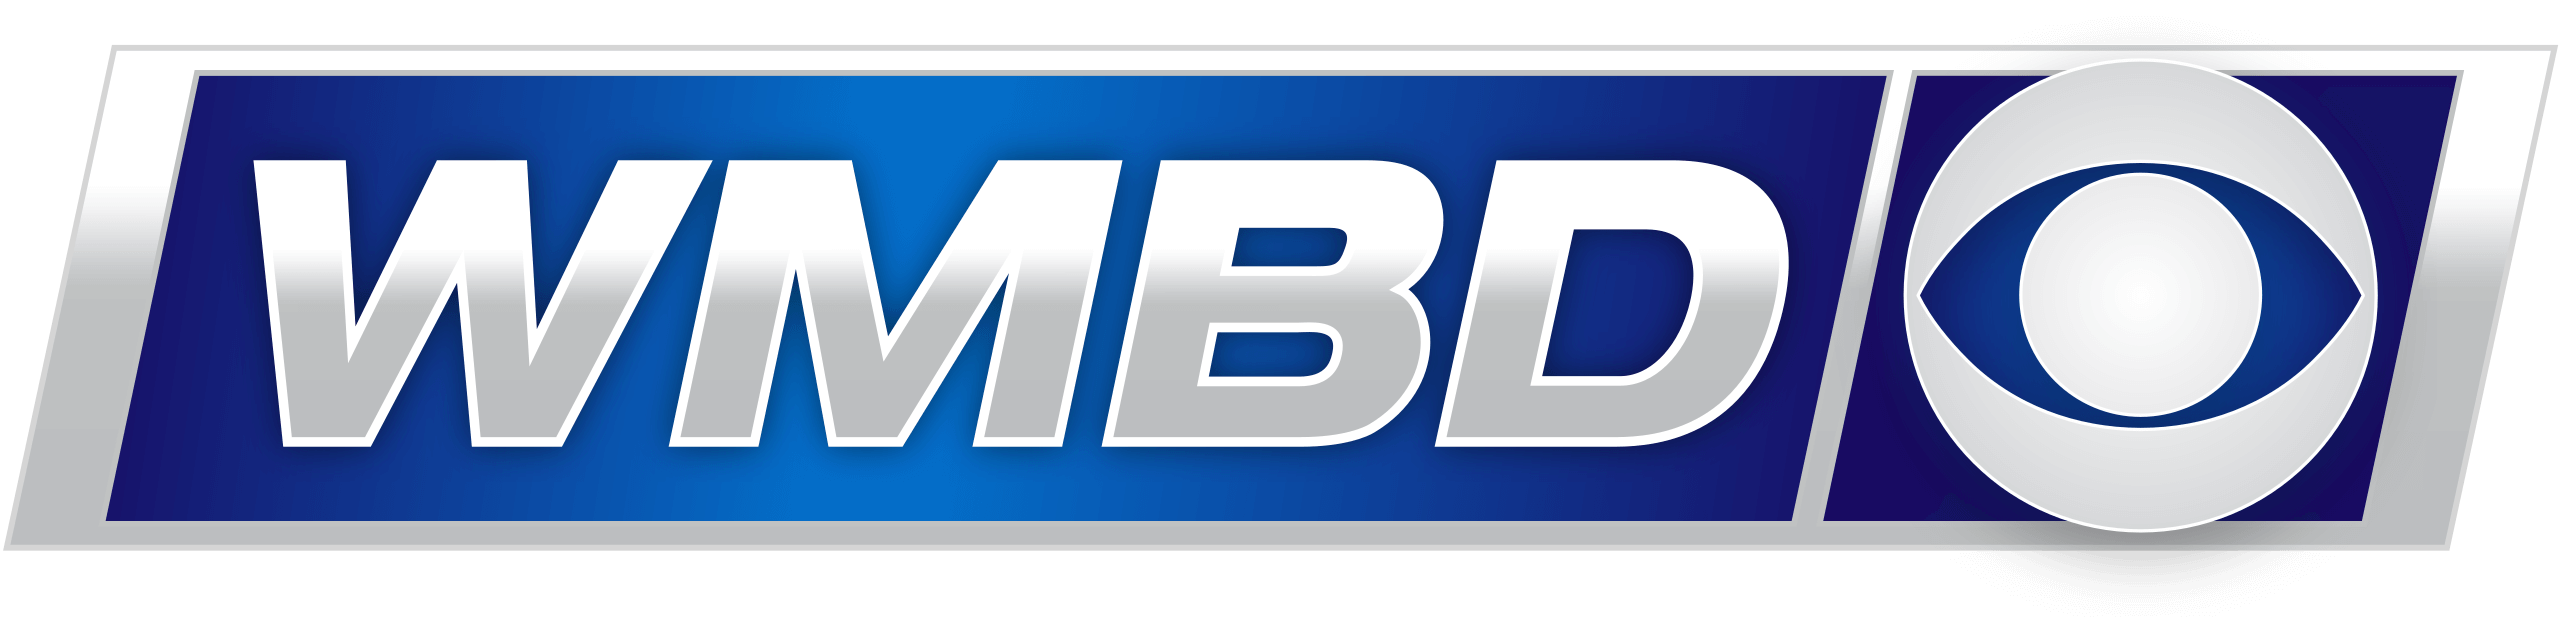 news WMBD-TV_logo.png